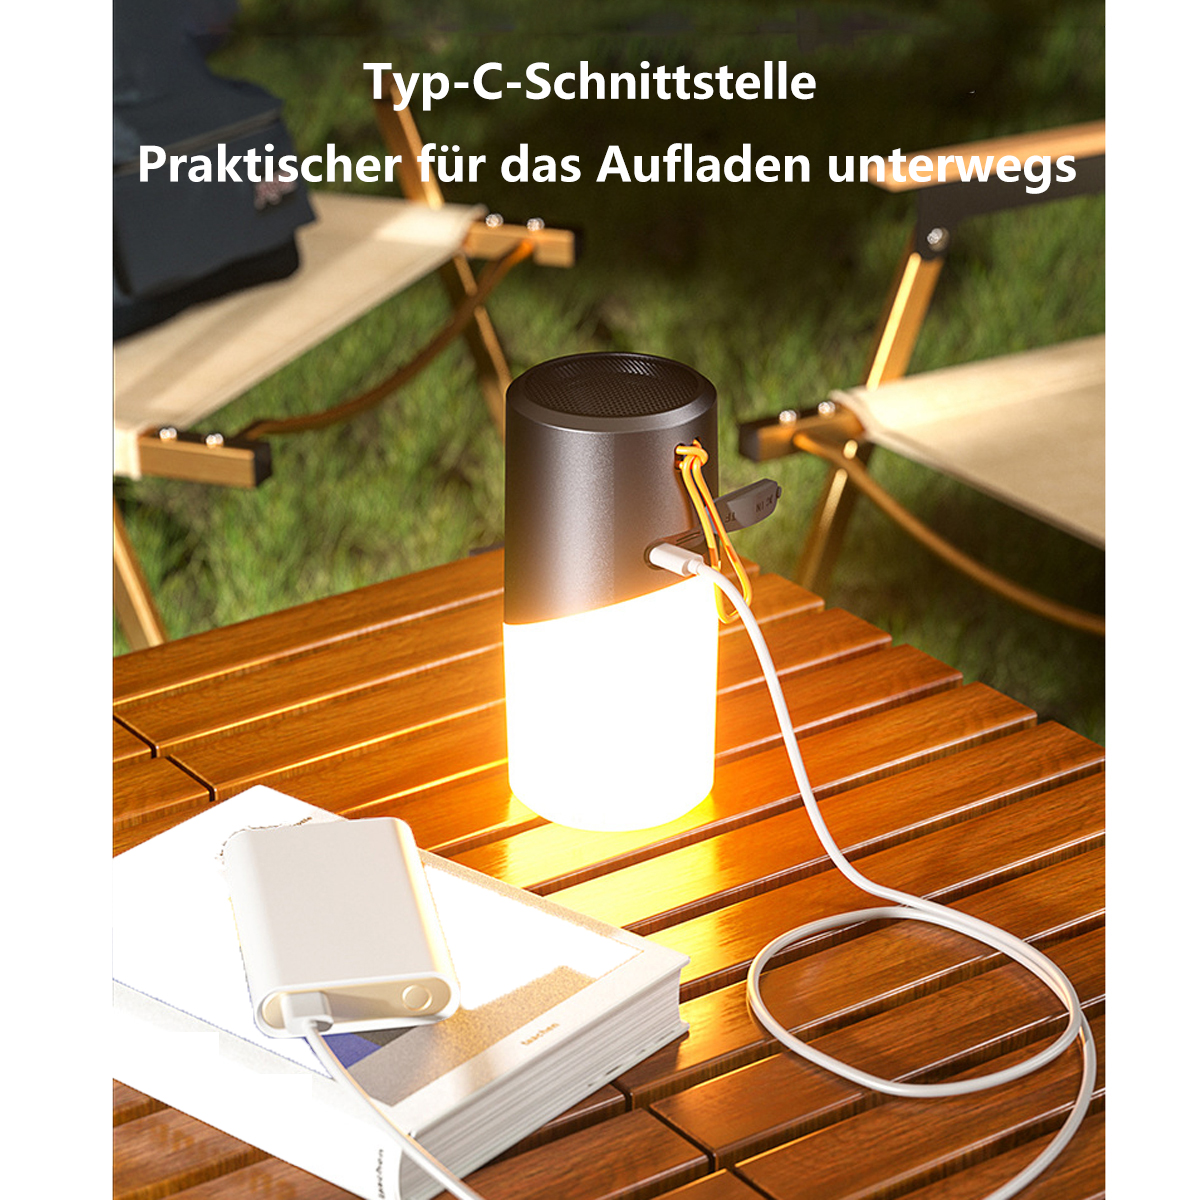 SYNTEK Lautsprecher Wireless bluetooth speaker portable waterproof Weiß, small light audio light Wasserfest Bluetooth-Lautsprecher, outdoor ambient